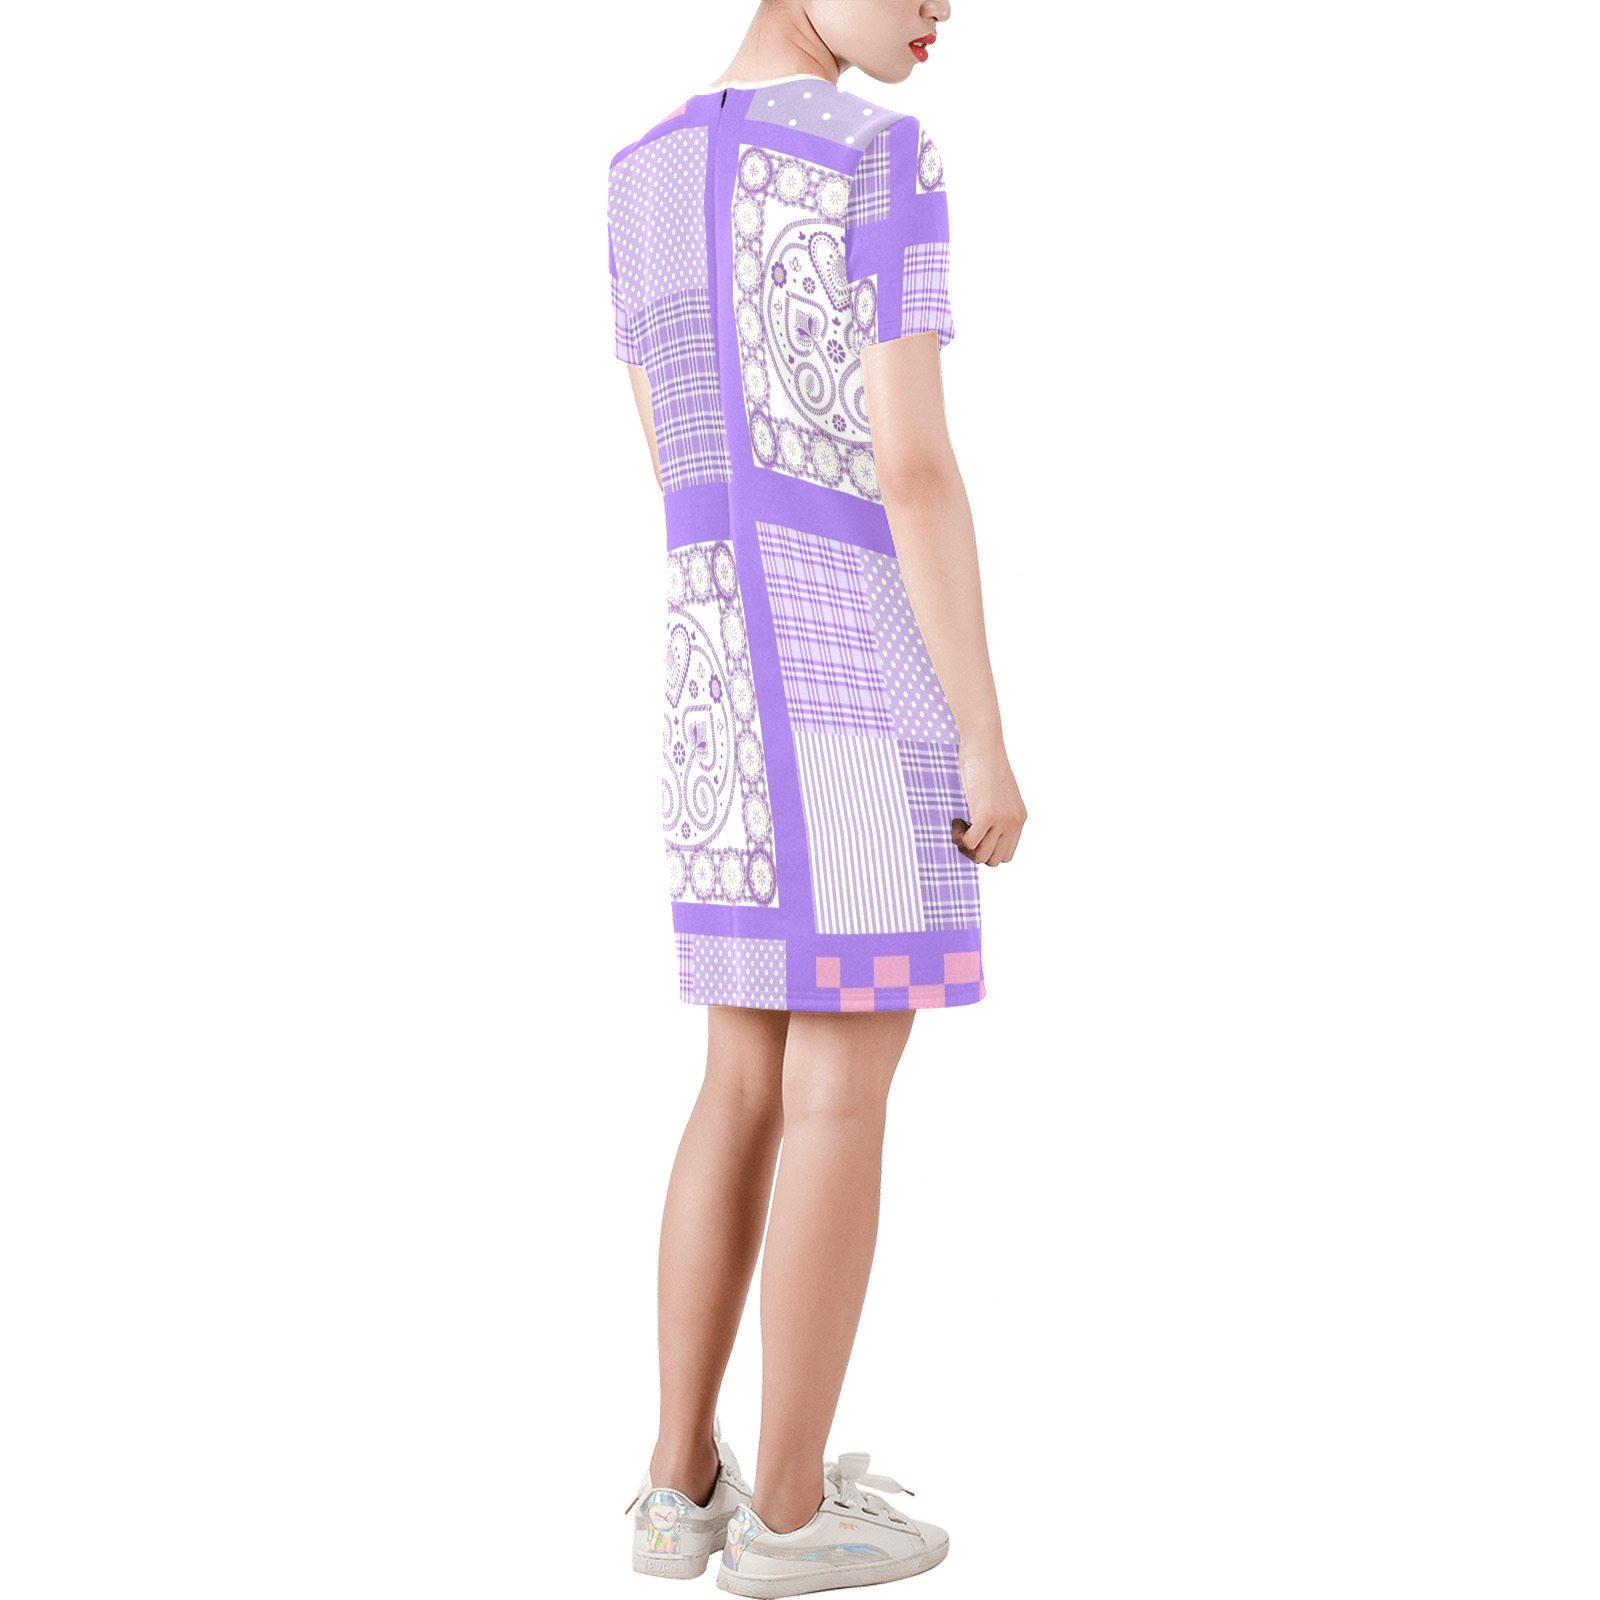 Pink and Purple Patchwork Design Short-Sleeve Round Neck A-Line Dress (Model D47)